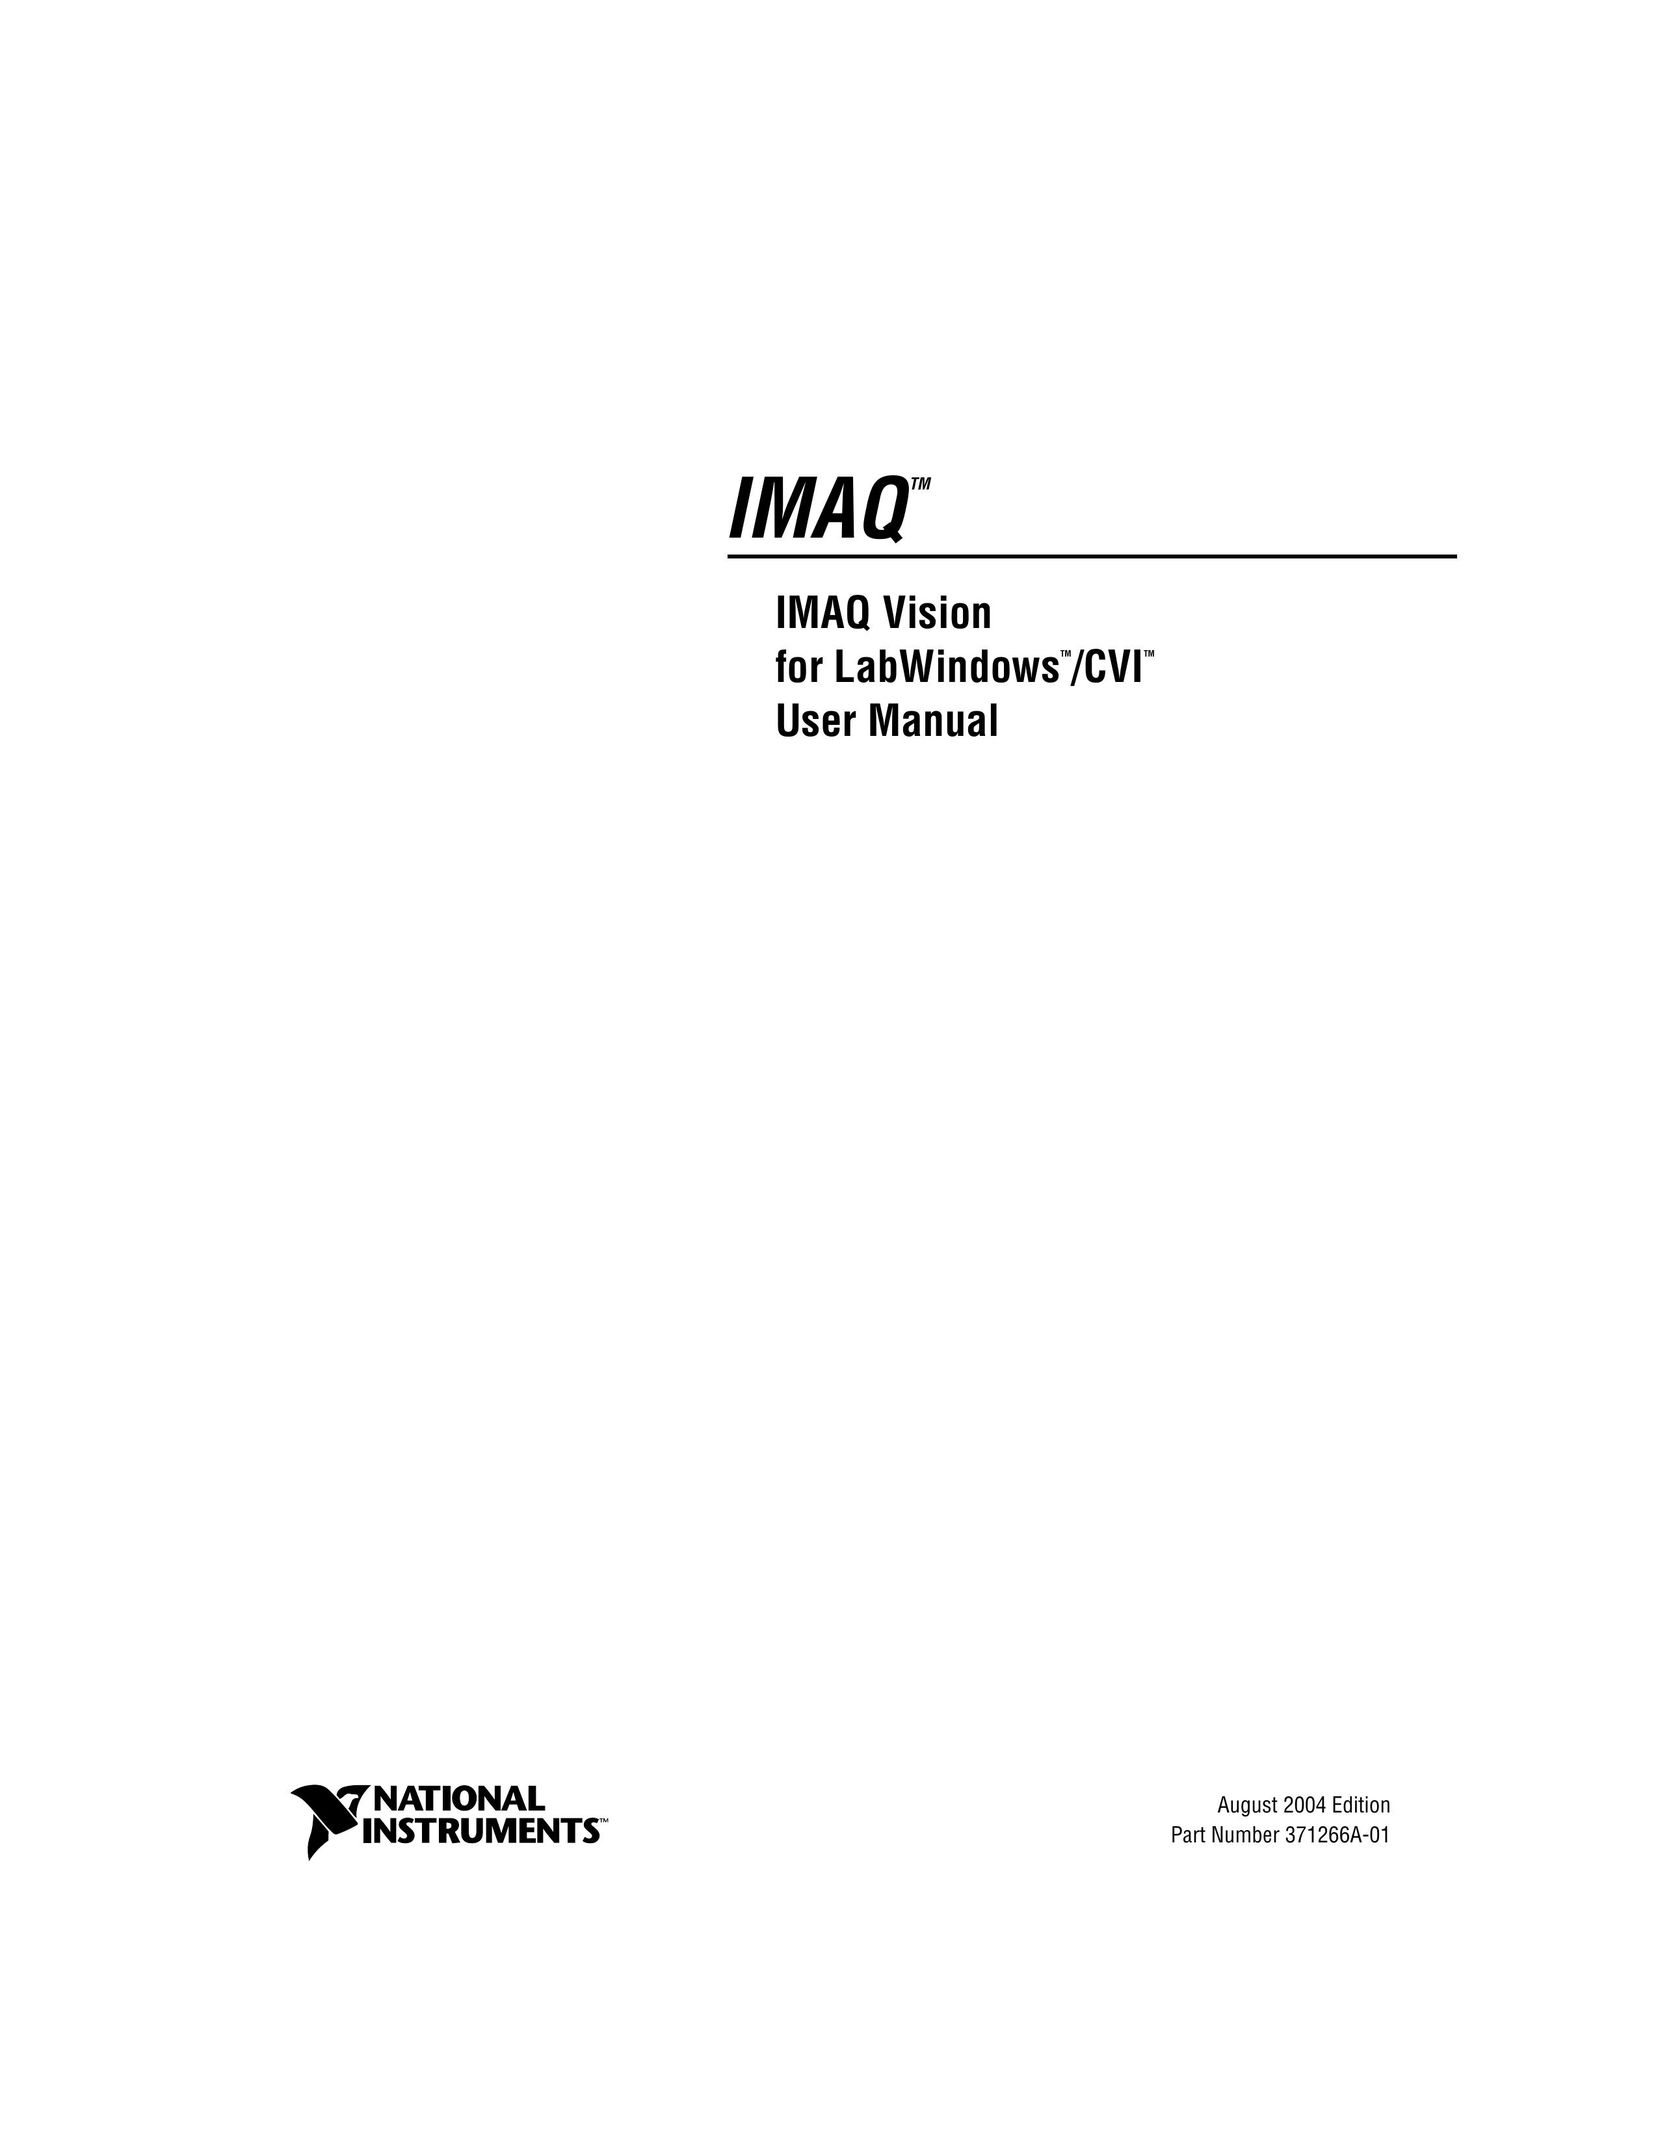 National Instruments IMAQ Vision for LabWindows TM /CVI Network Card User Manual